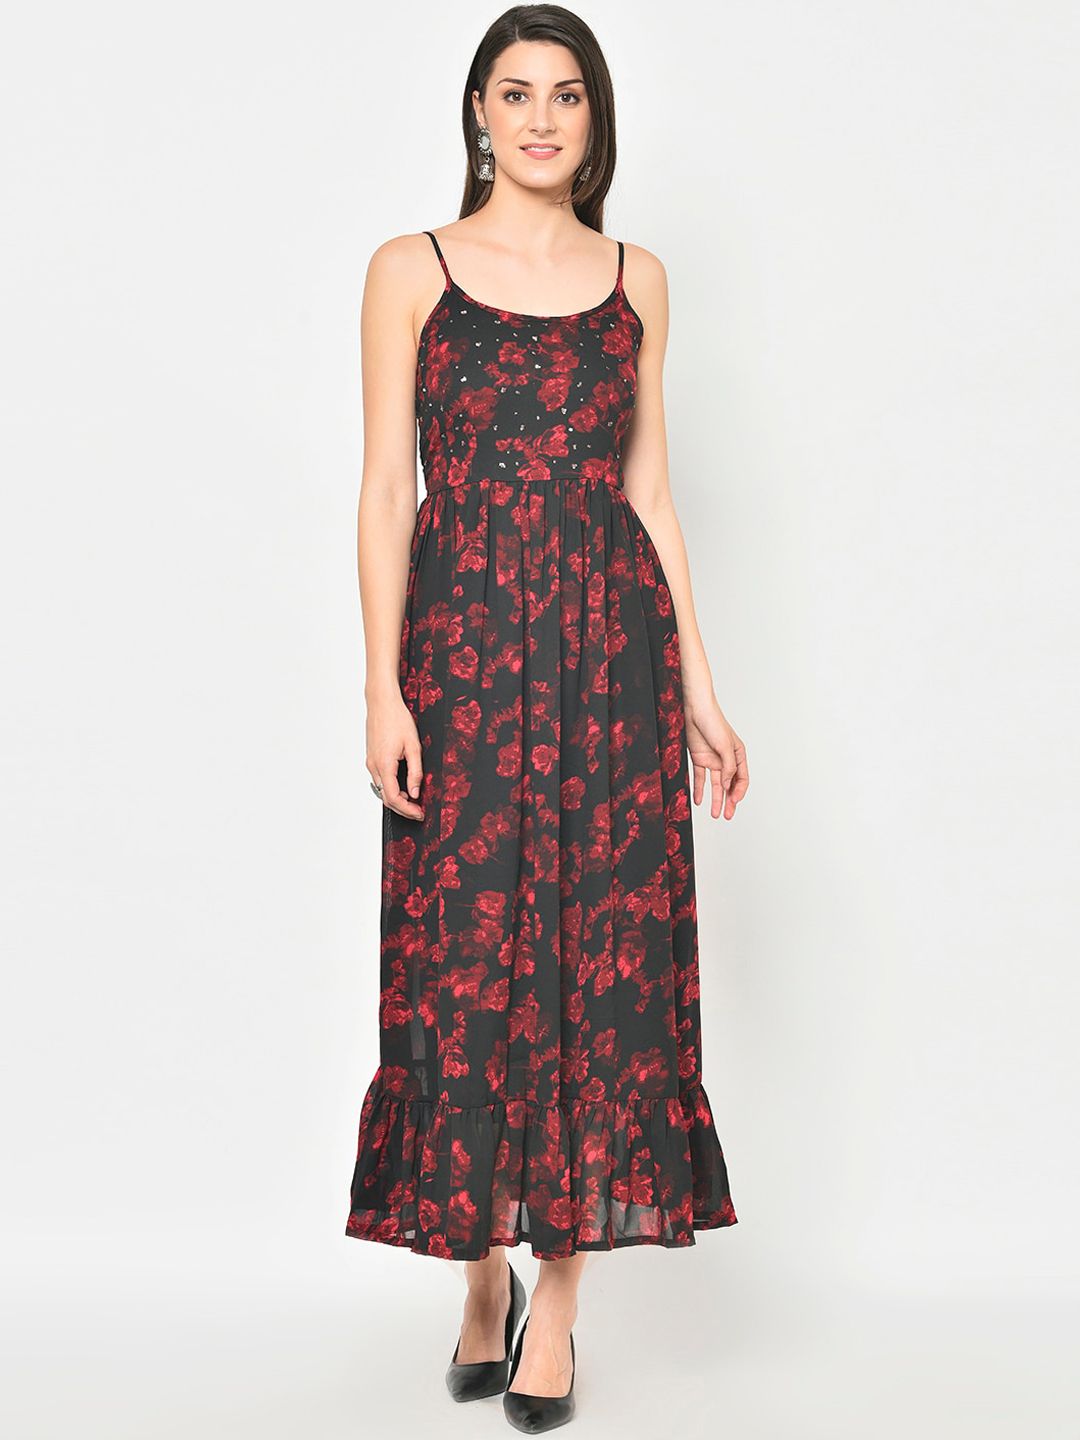 DESI WOMANIYA Black Floral Georgette Maxi Dress Price in India